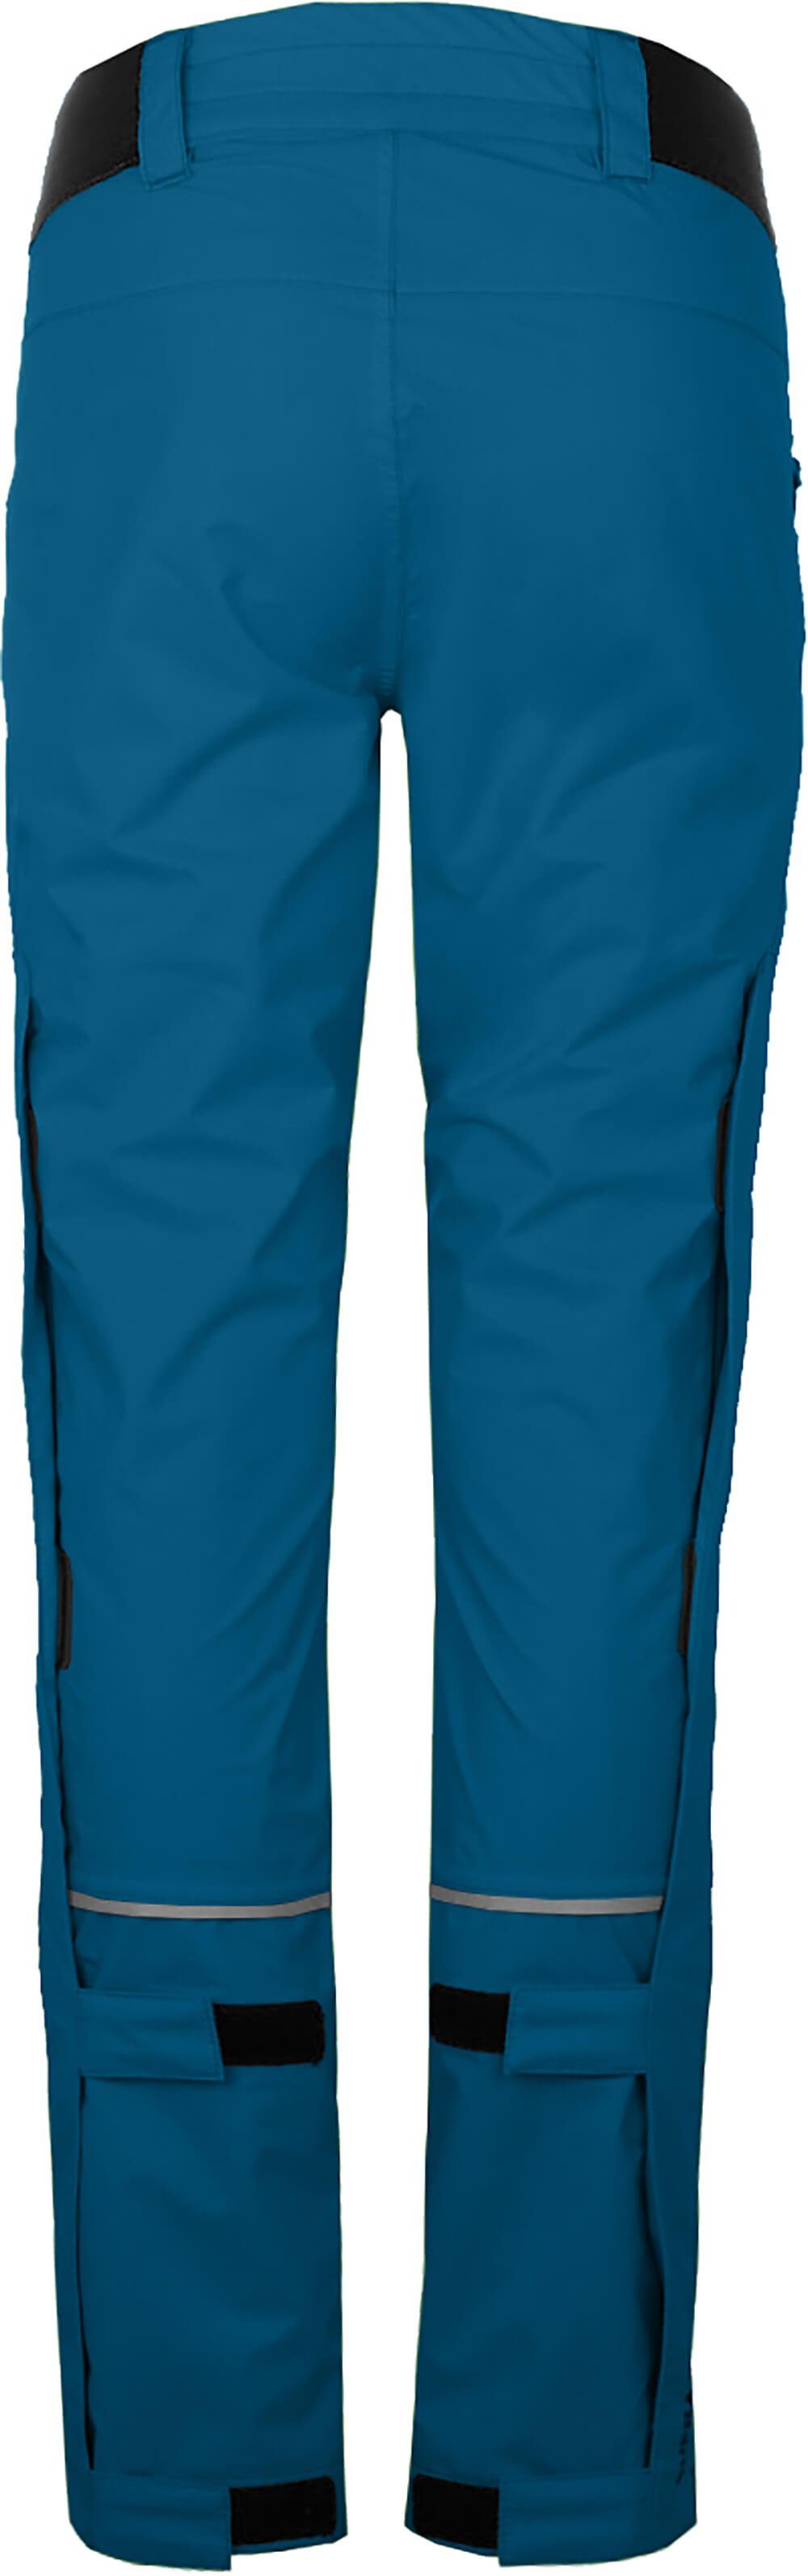 Wassersäule, Bergson Regenhose, blau 12000 mm Saphir MICK Netzfutter, Regenhose COMFORT Normalgrößen, Kinder